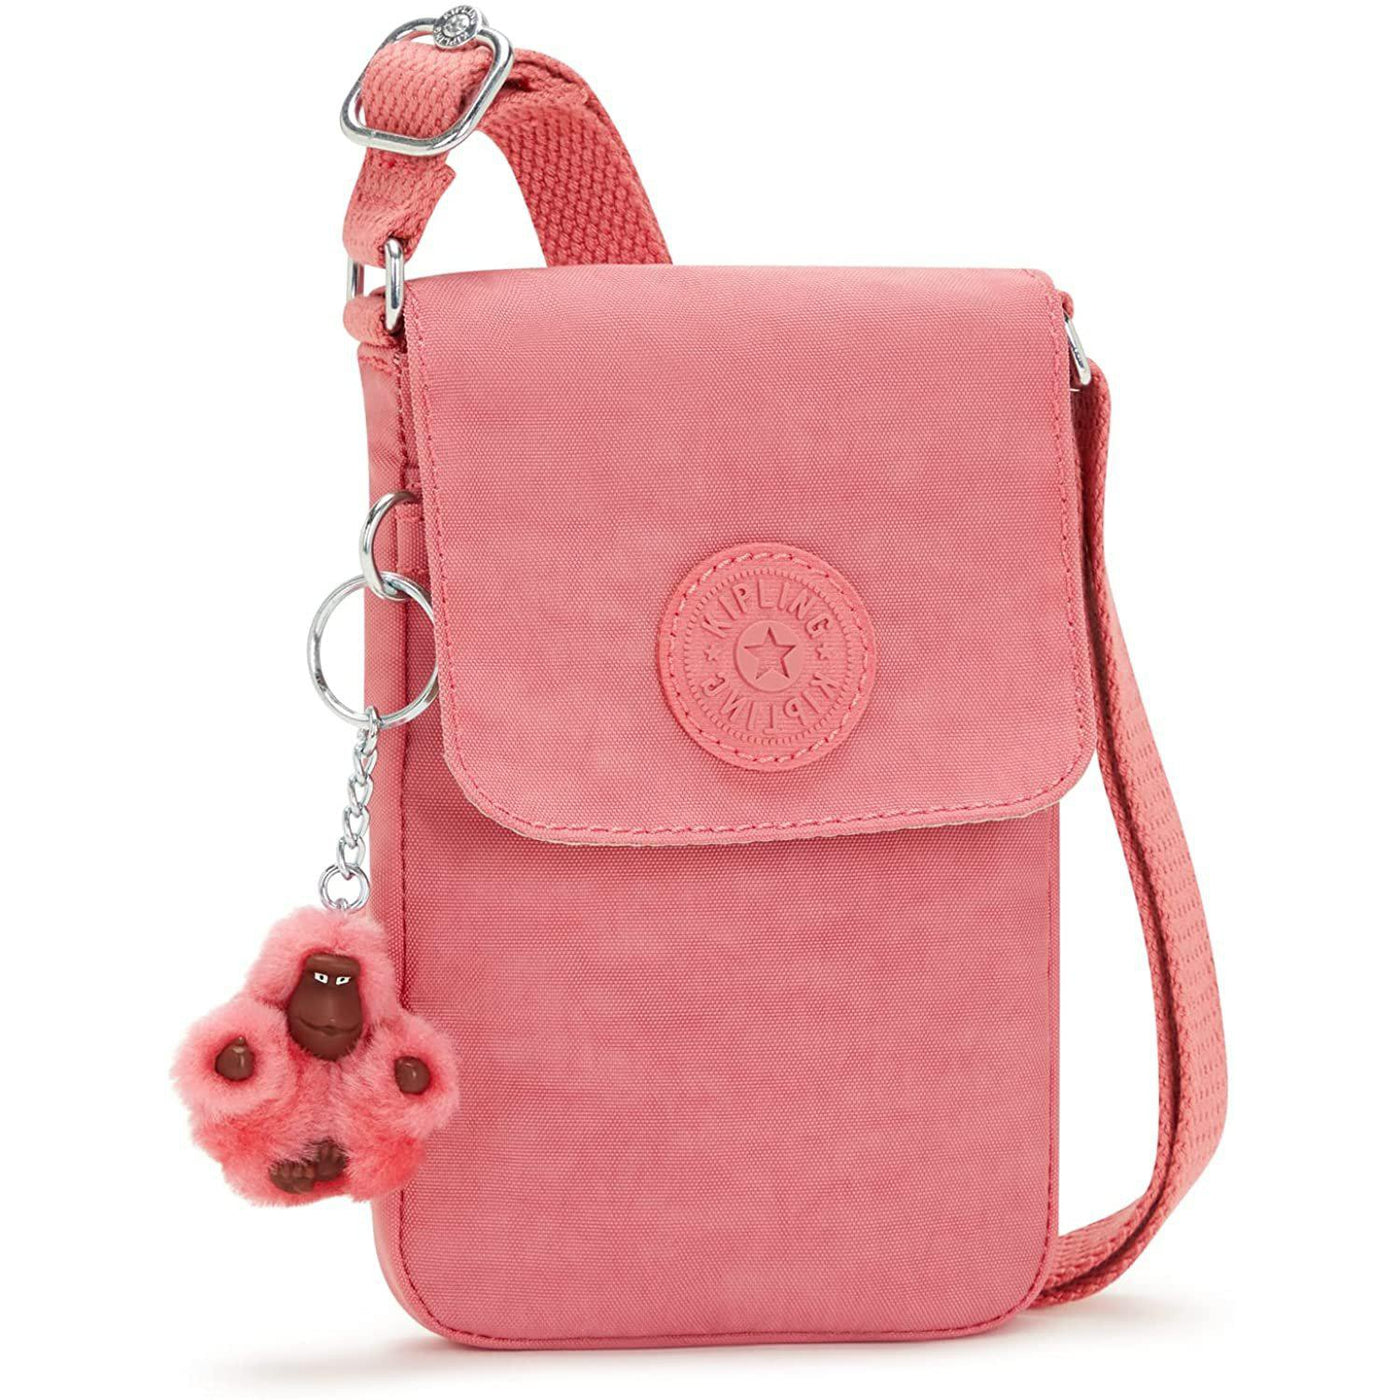 Everyday handbags - Cute crossbody bags and everyday purses | Kipling